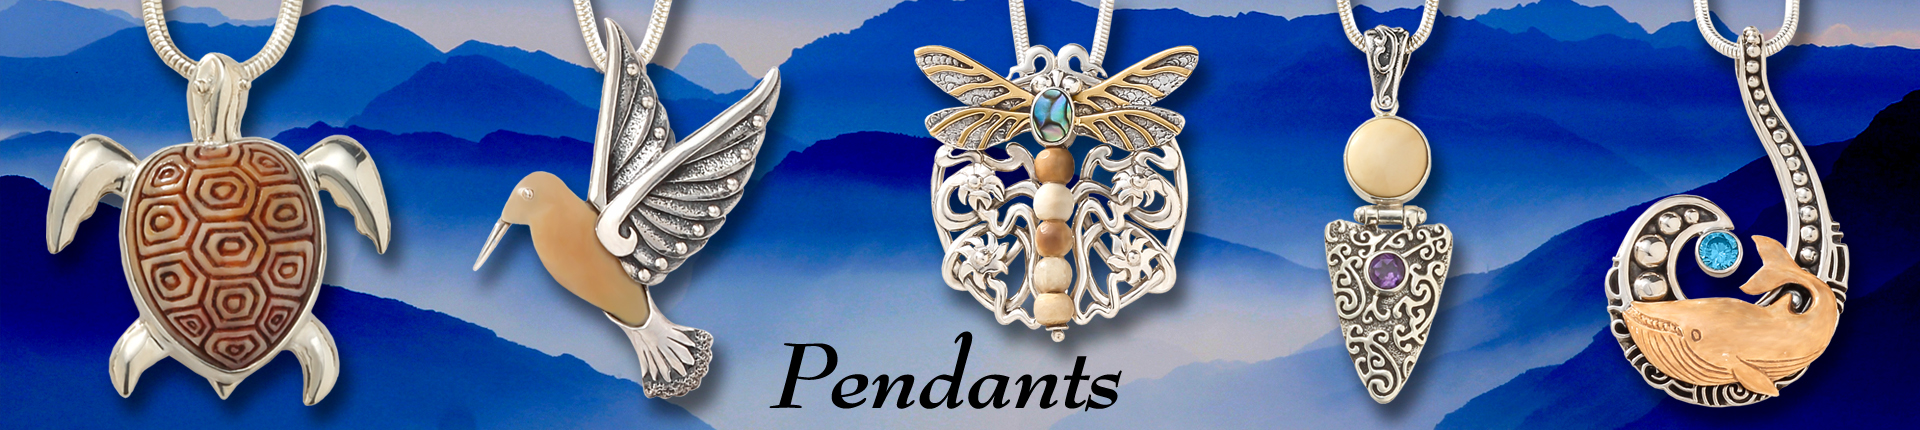 Zealandia sterling silver pendants, fossilized ivory jewelry